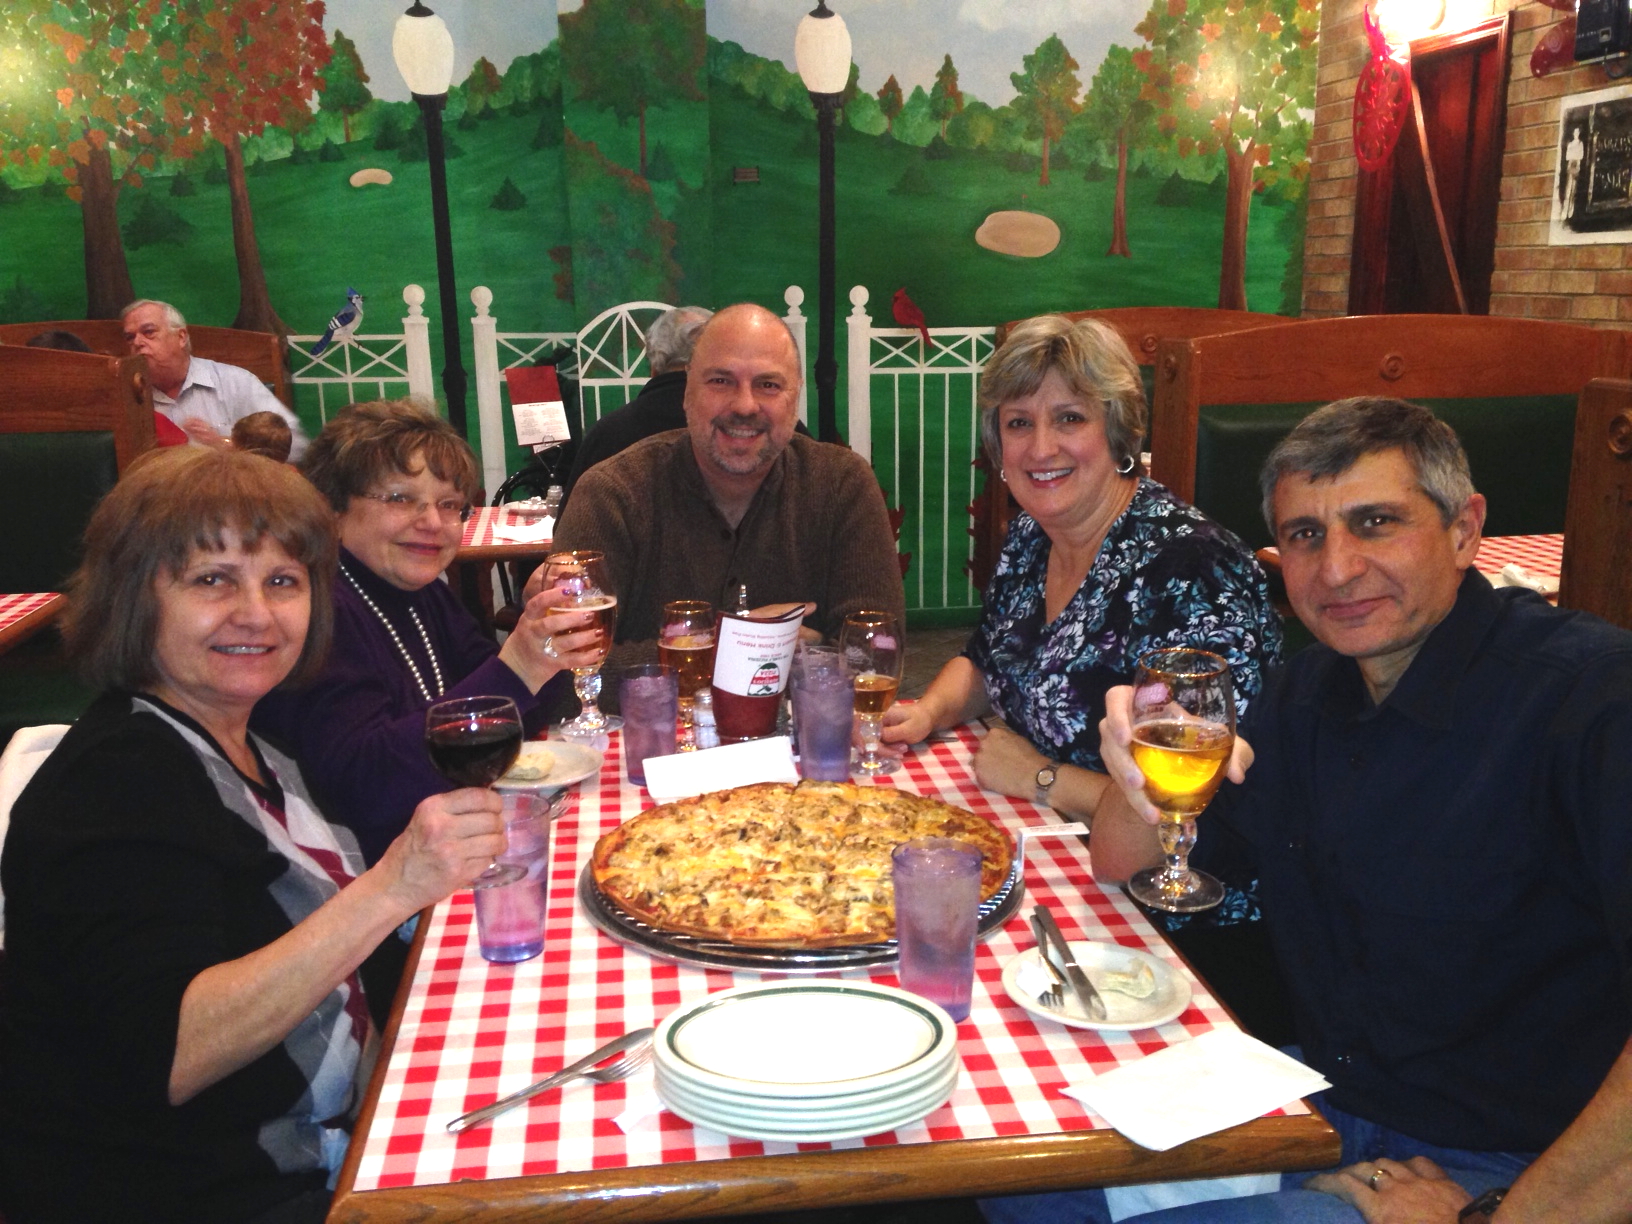 Aurelio's Pizza - Addison, IL - The Group - Dec 2013